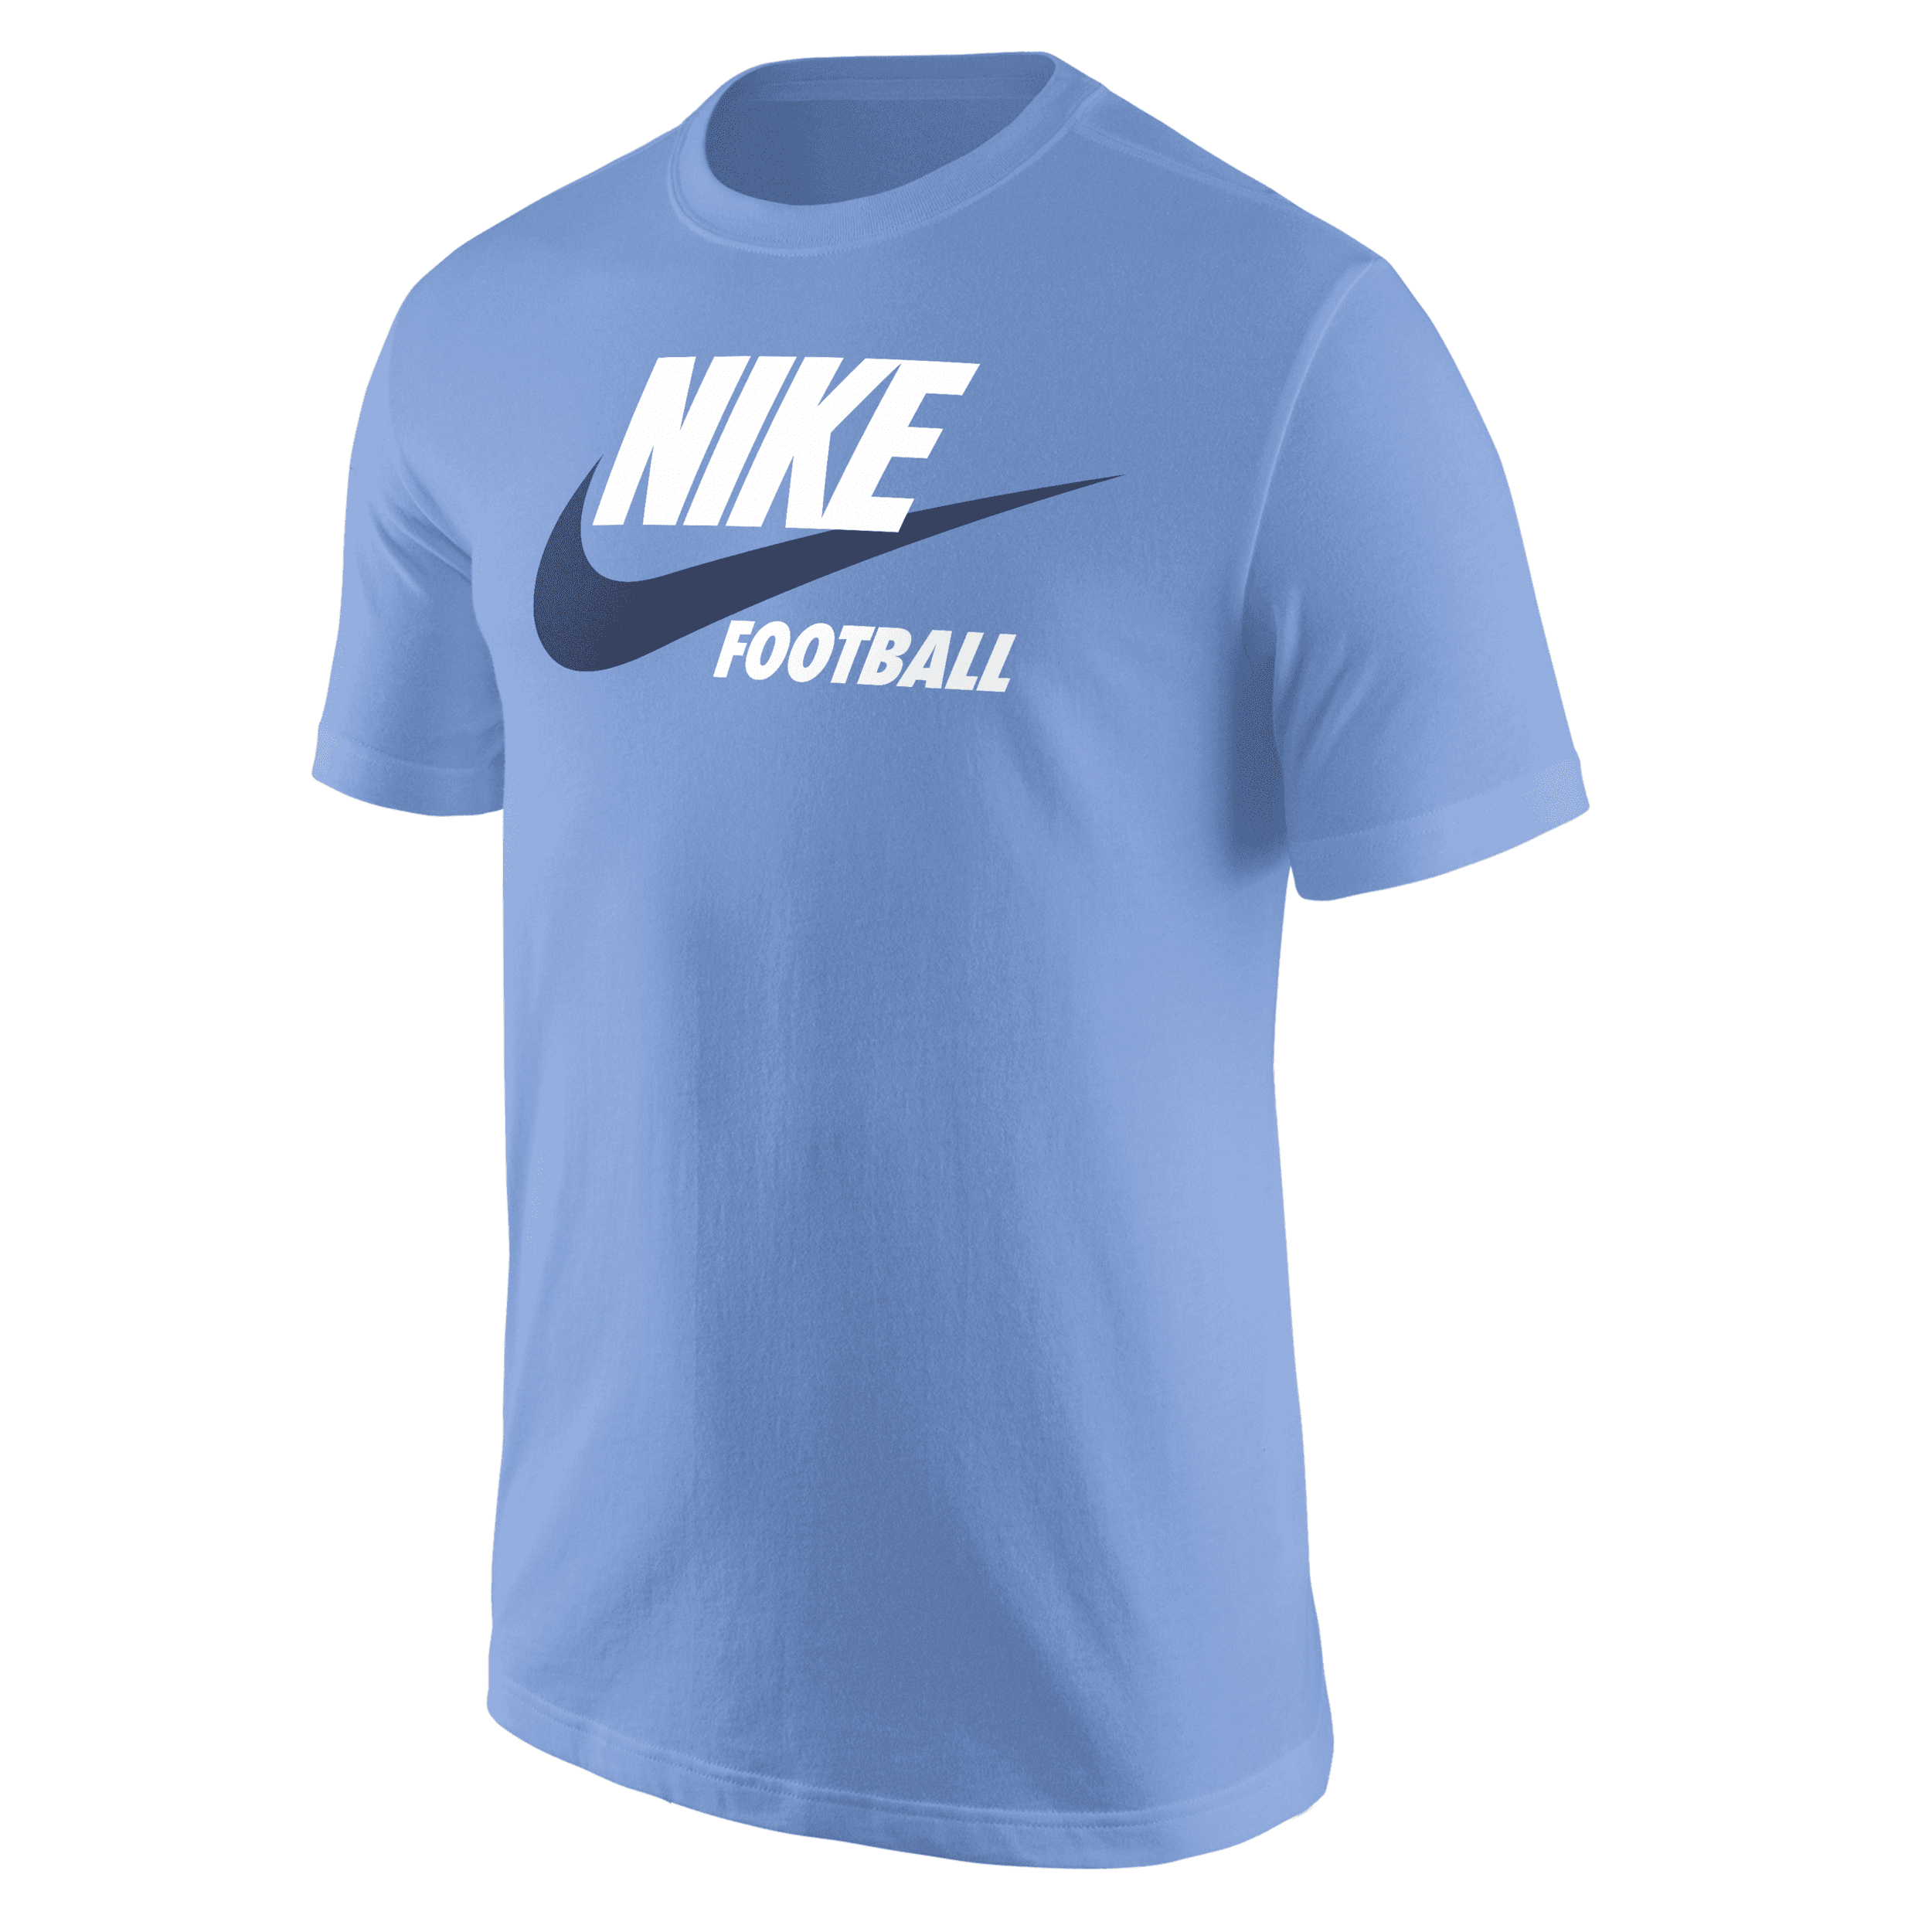 Nike Men's Football T-shirt In Blue